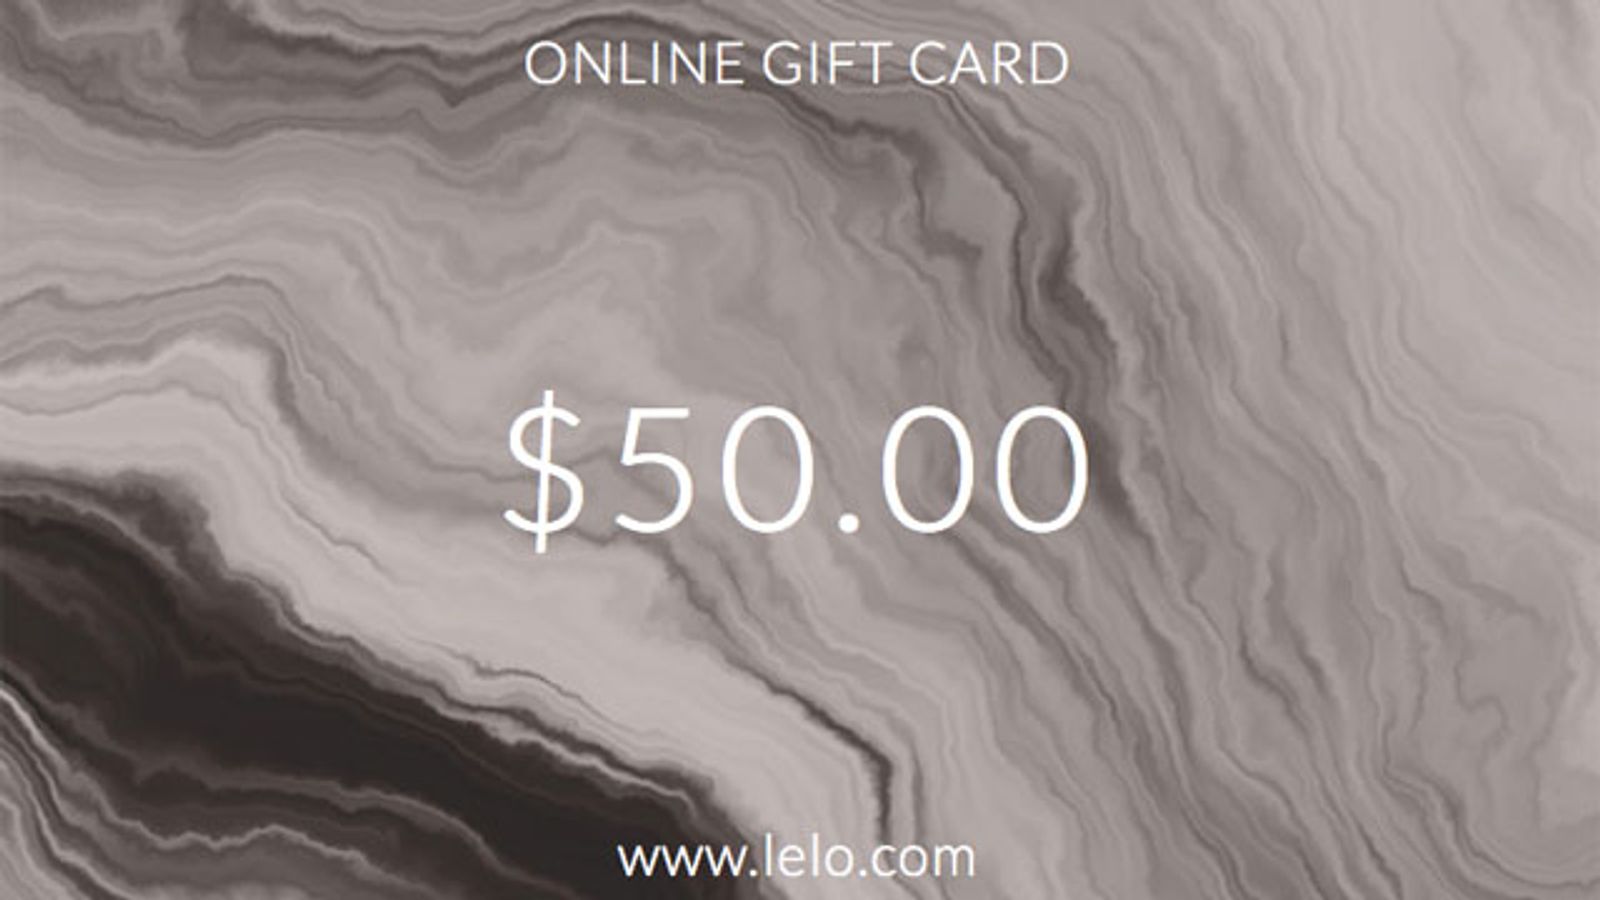 LELO Introduces e-Gift Cards